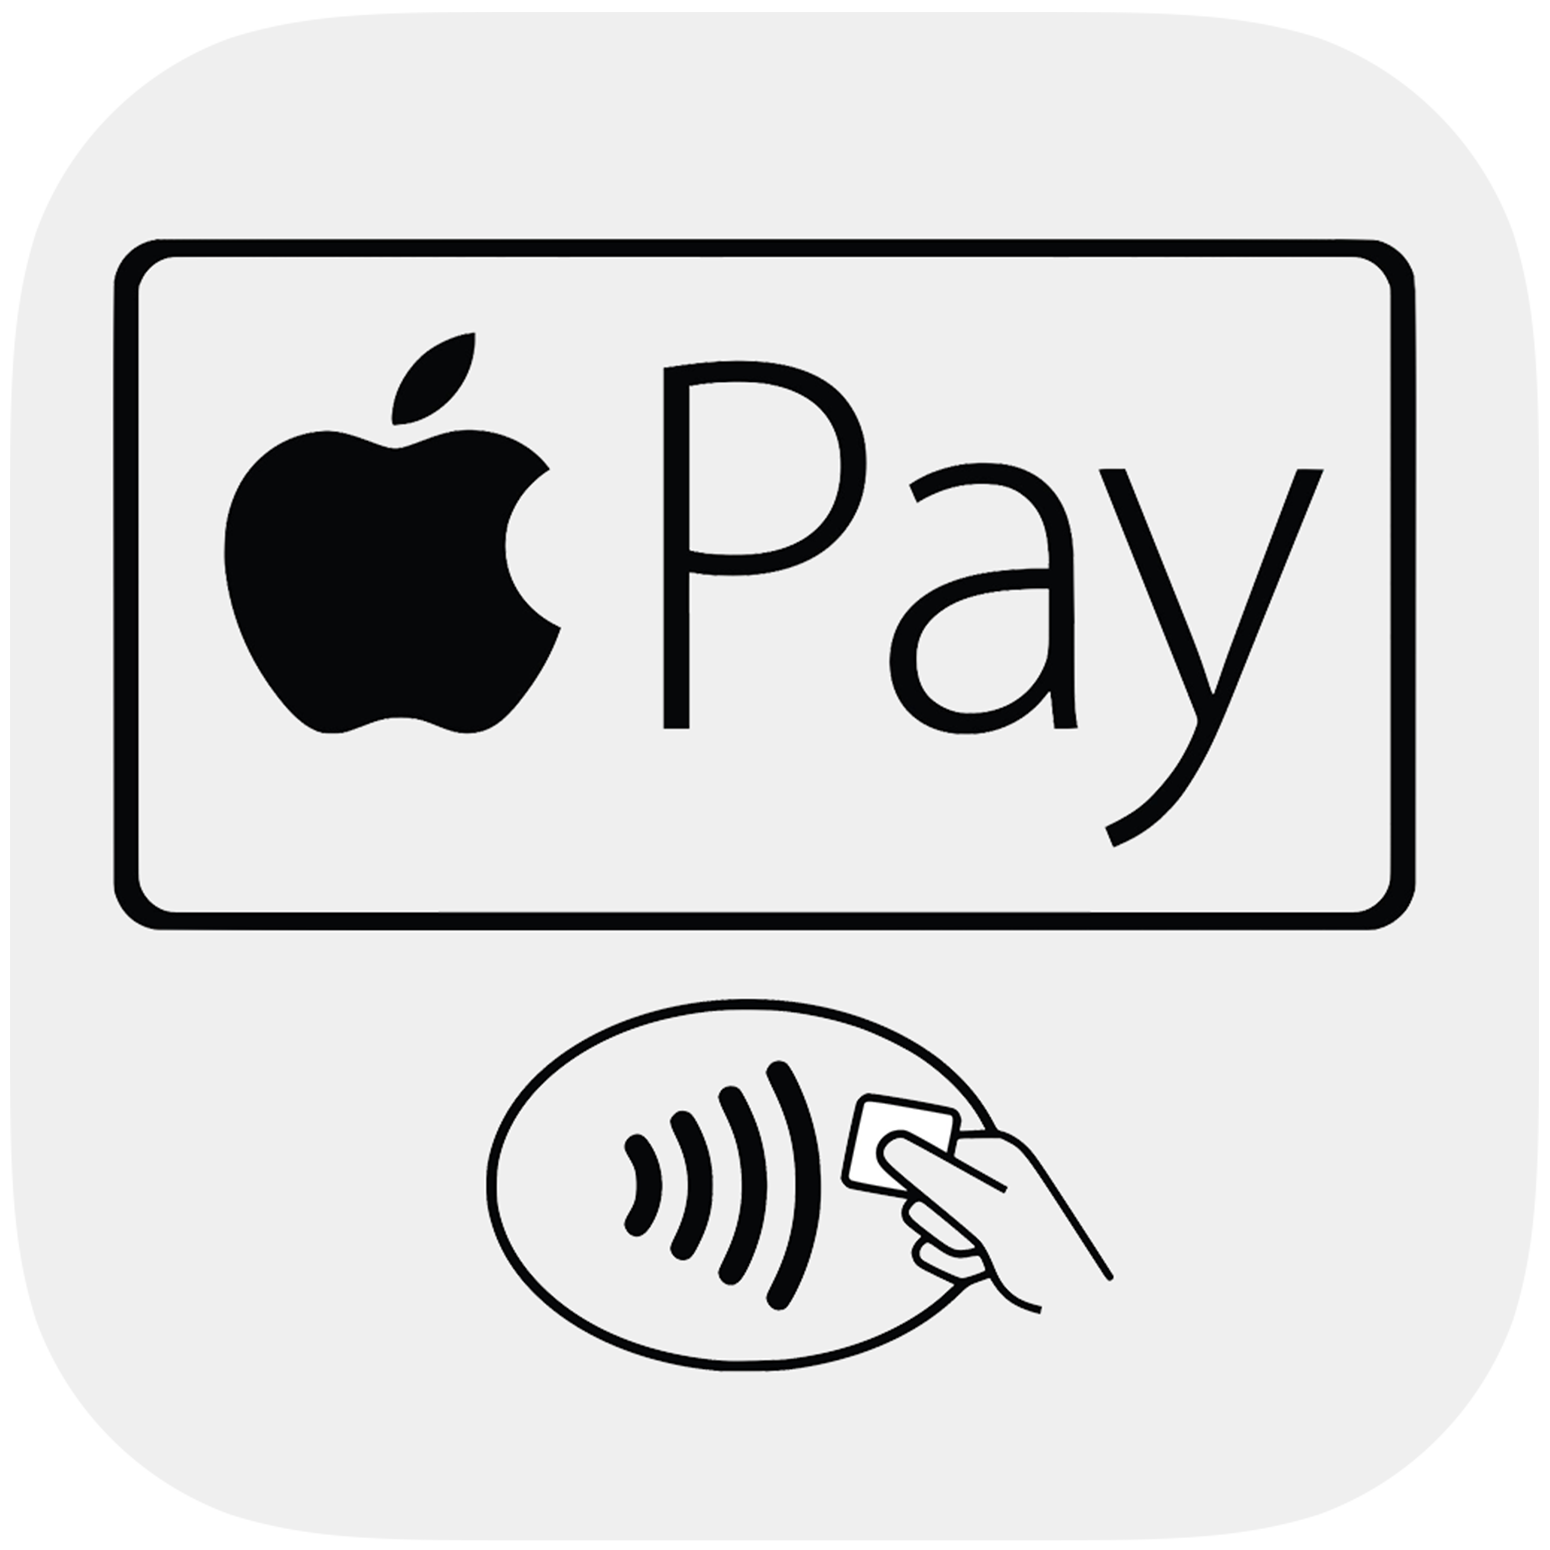 Also pay. Apple pay. Pay логотип. Знак Apple pay. Эпл пей иконка.